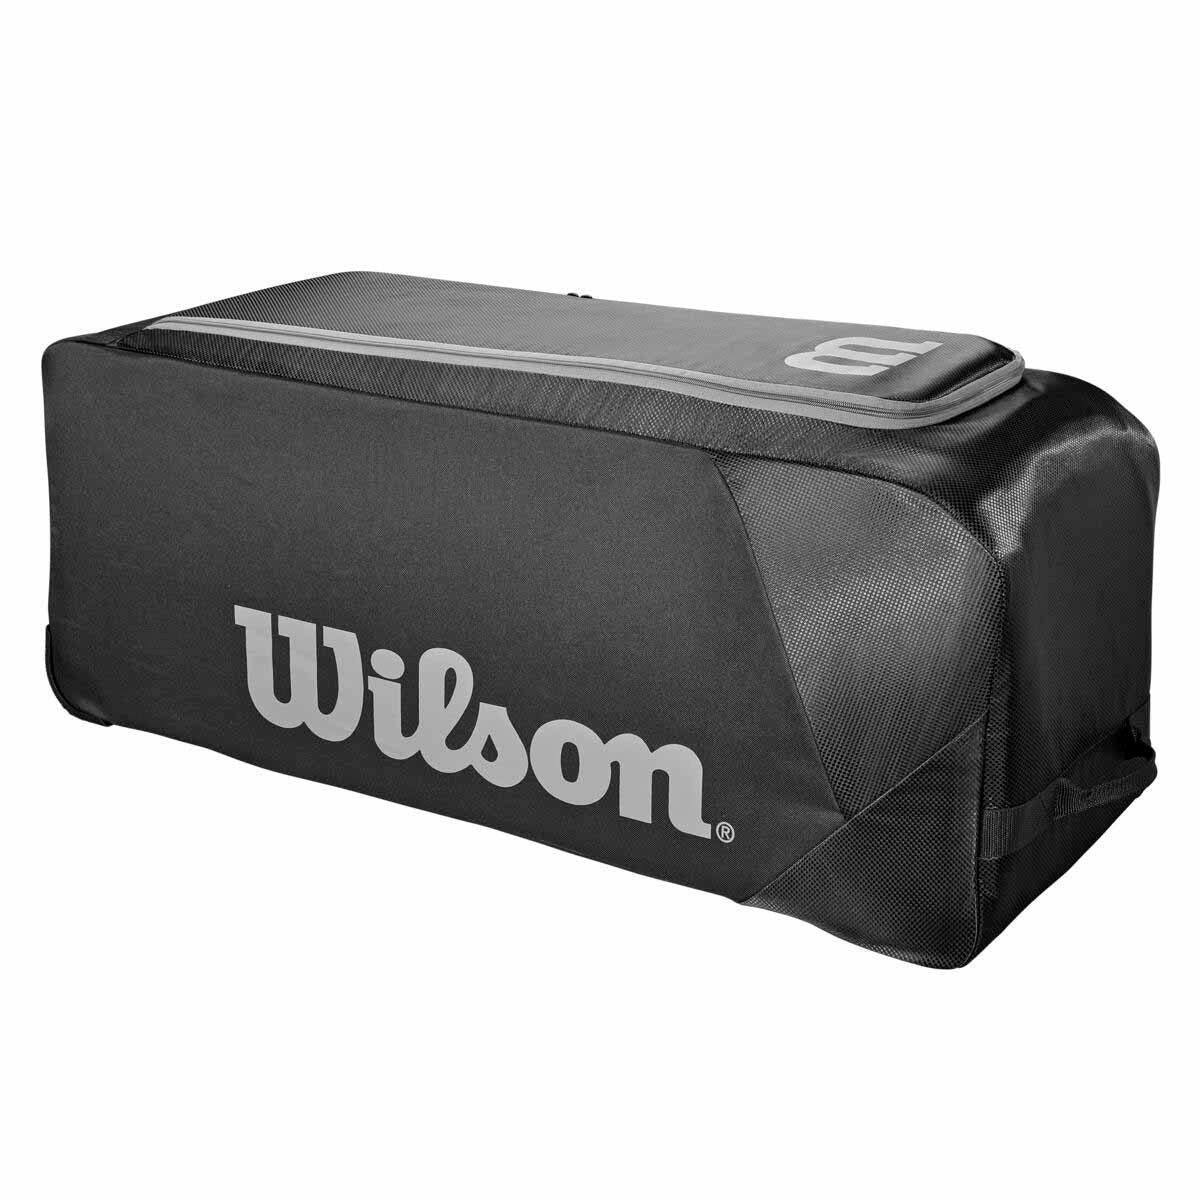 Wilson Team Gear Bag on Wheels- Black